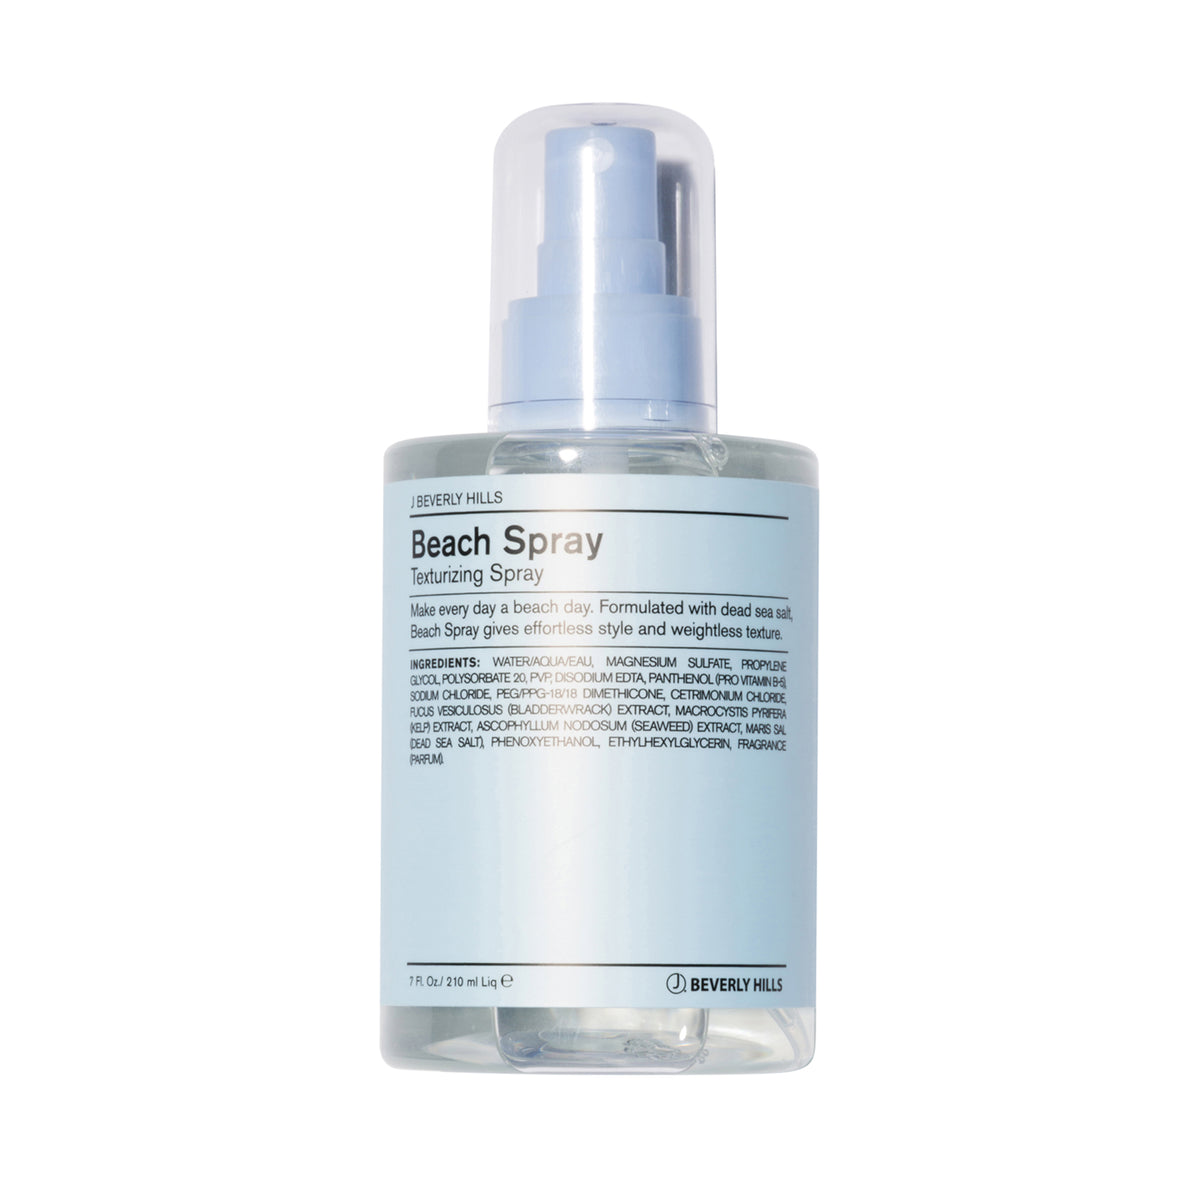 BEACH SPRAY Texturizing Spray 236 ml